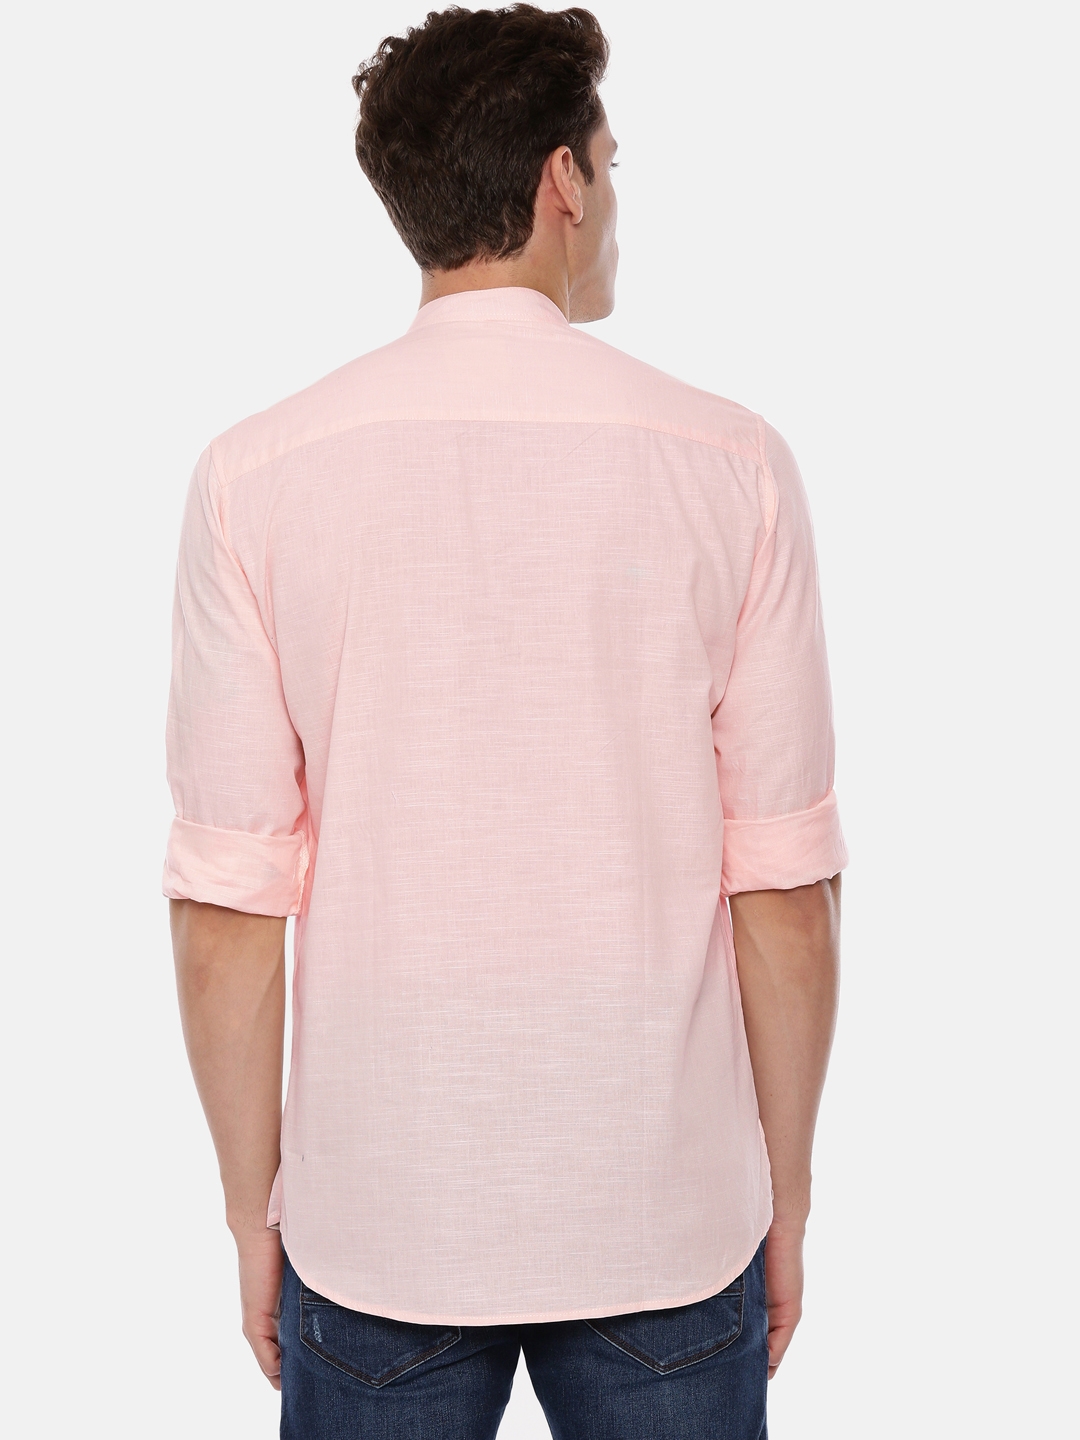 Roller Fashions Men's Cotton Solid Straight Pink Color Short Kurta